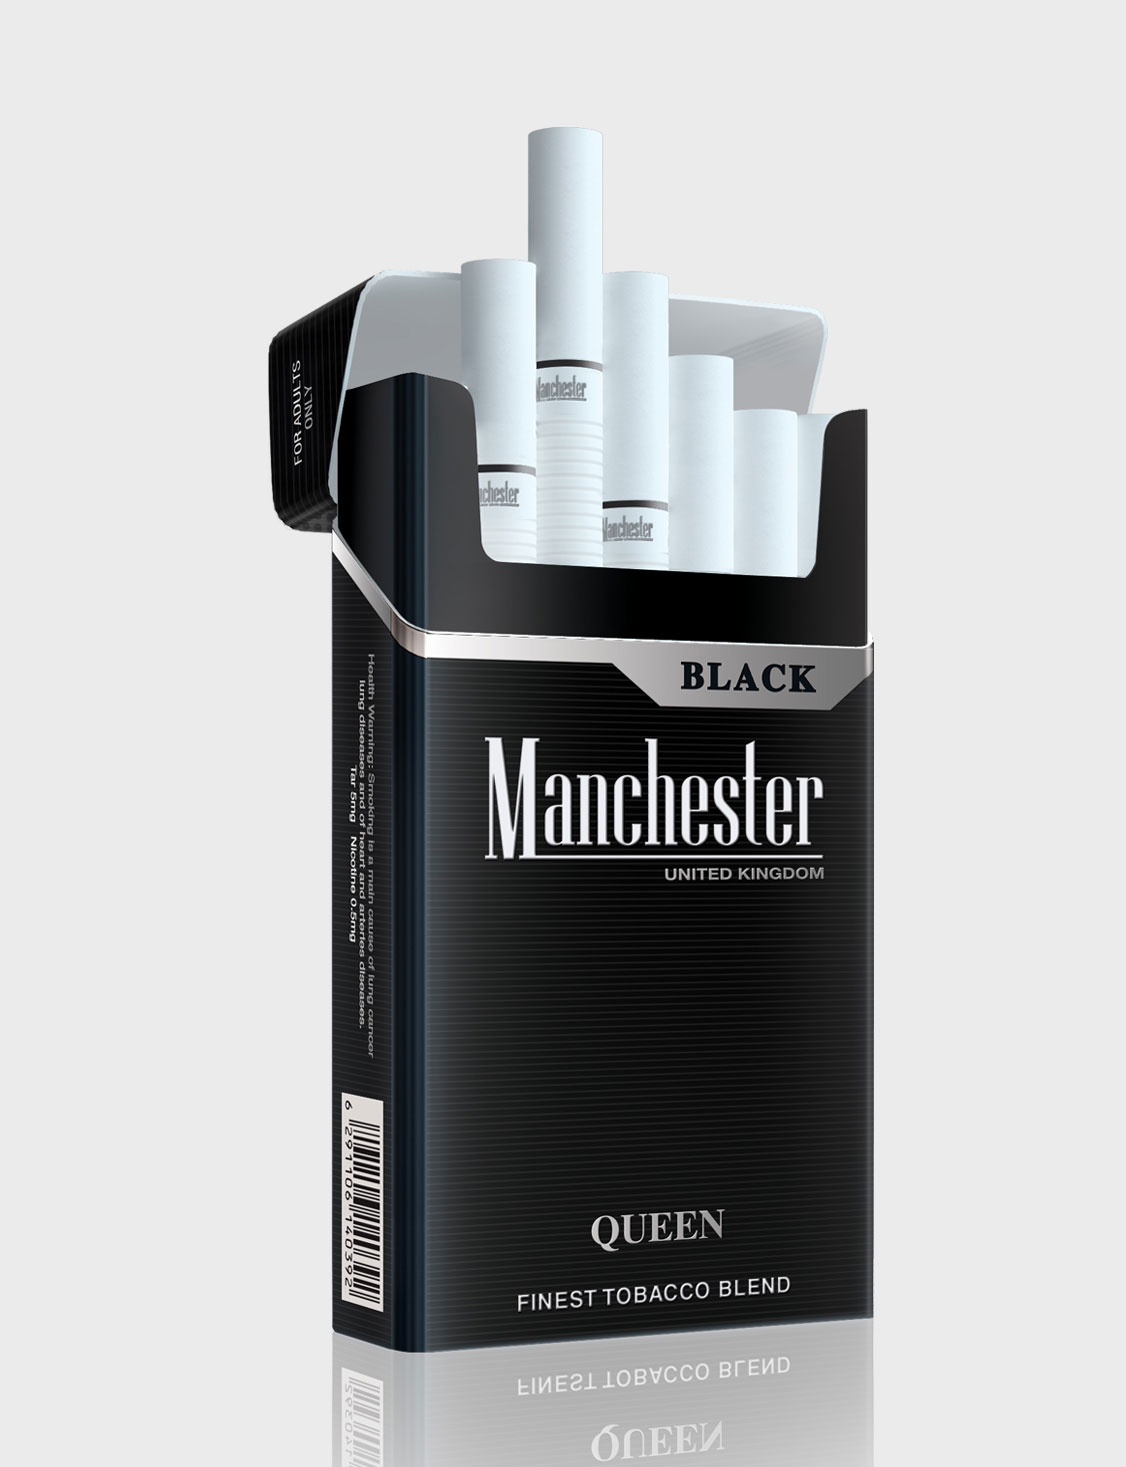 Манчестер компакт. Сигареты Манчестер Блэк компакт. Манчестер нано Блэк сигареты. Сигареты Манчестер Юнайтед кингдом. Manchester сигареты Compact Blue.